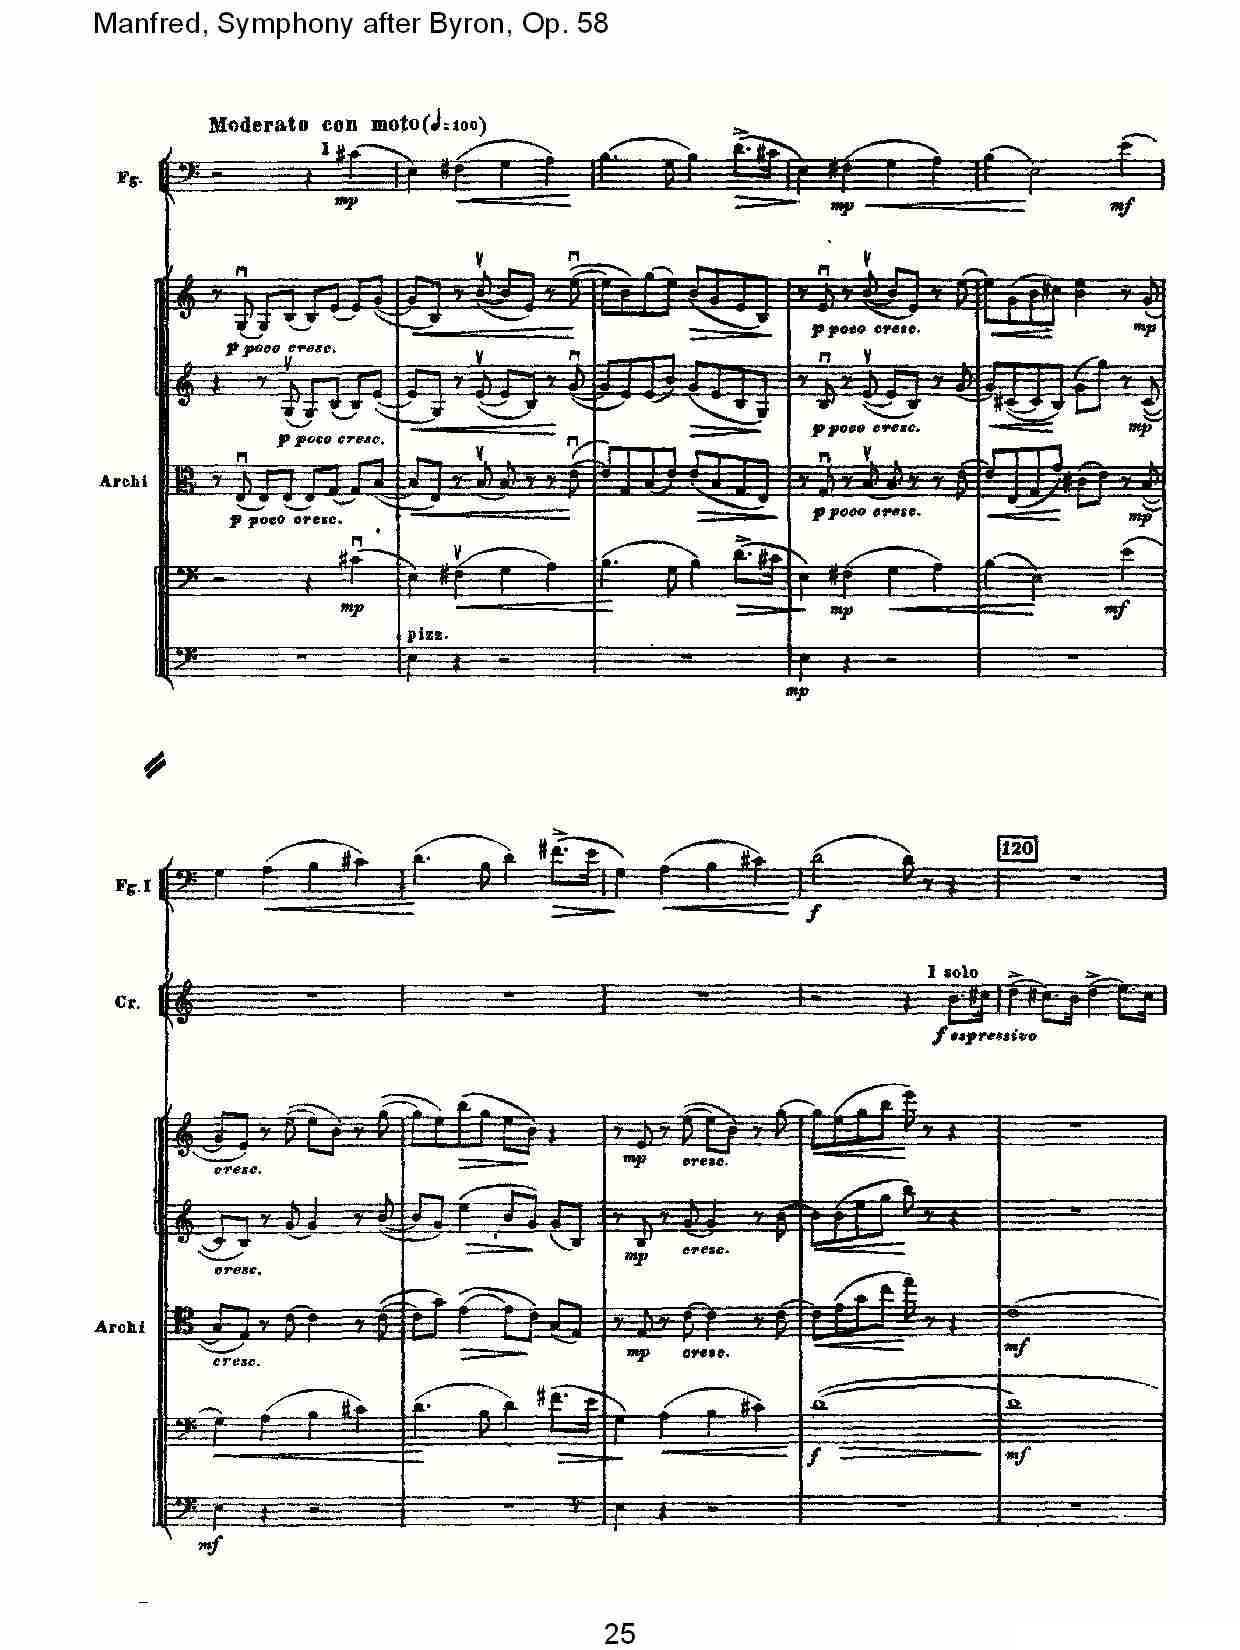 Manfred, Symphony after Byron, Op.58第一乐章（一）其它曲谱（图25）